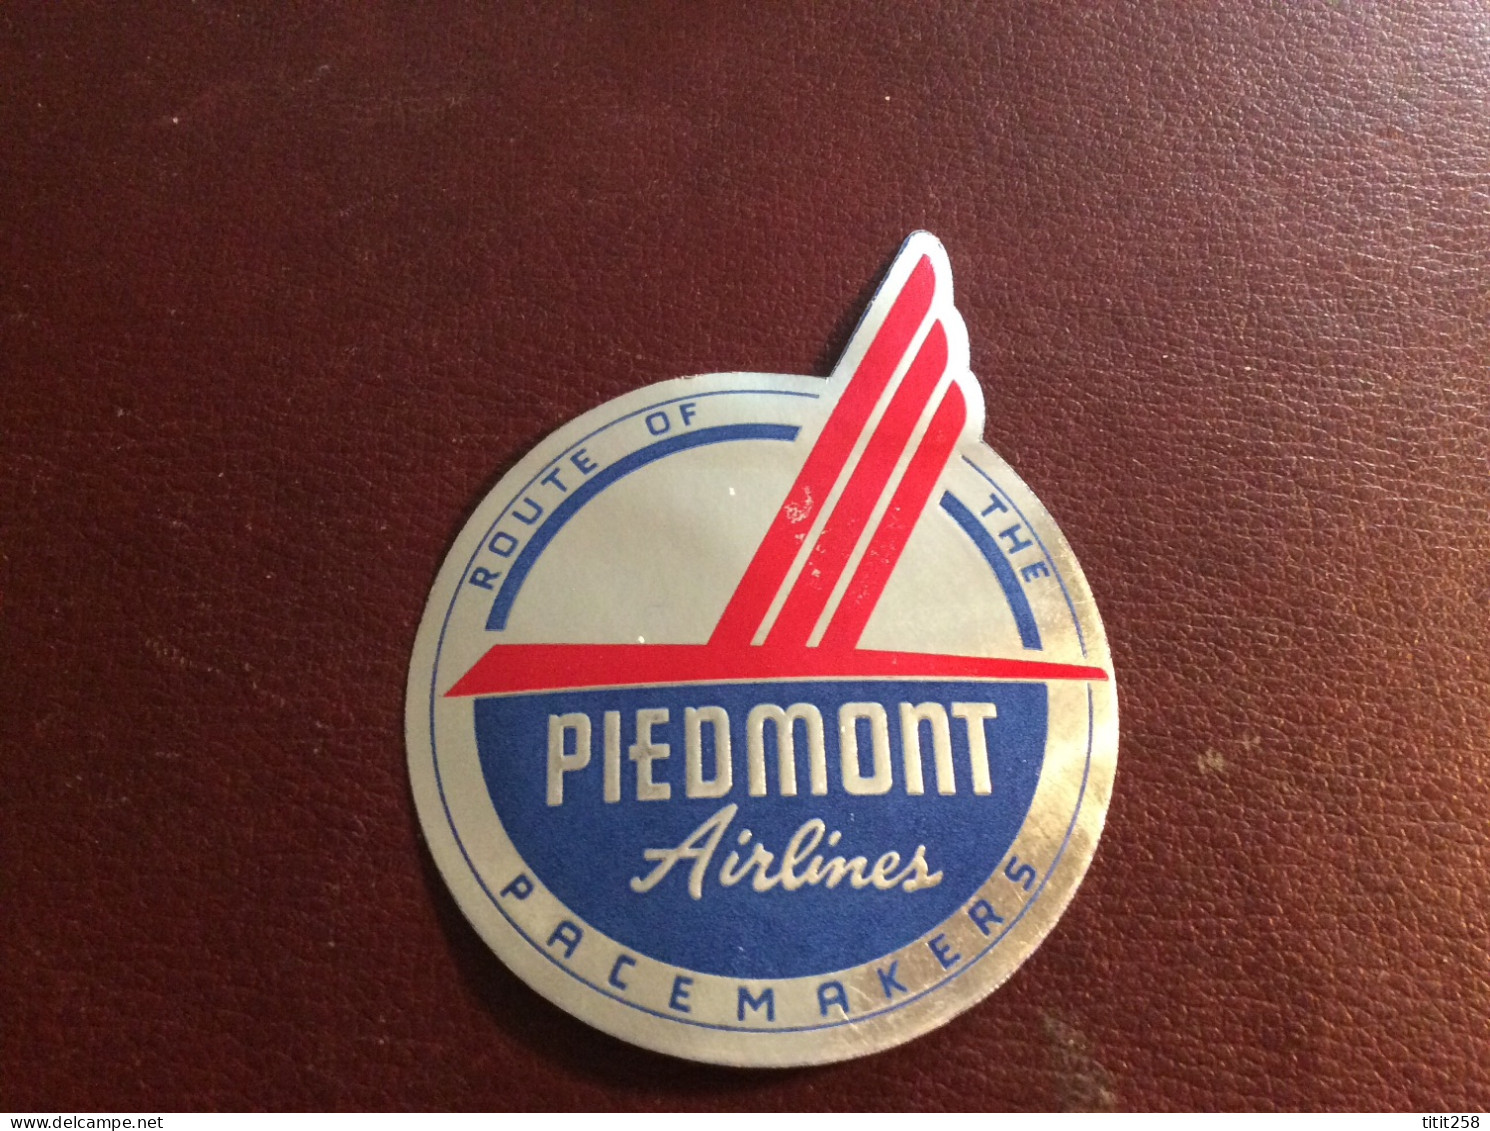 PIEDMONT AIRLINES ROUTE OF THE / PACEMAKERS  ( Avions Aéroports ) - Aufklebschilder Und Gepäckbeschriftung